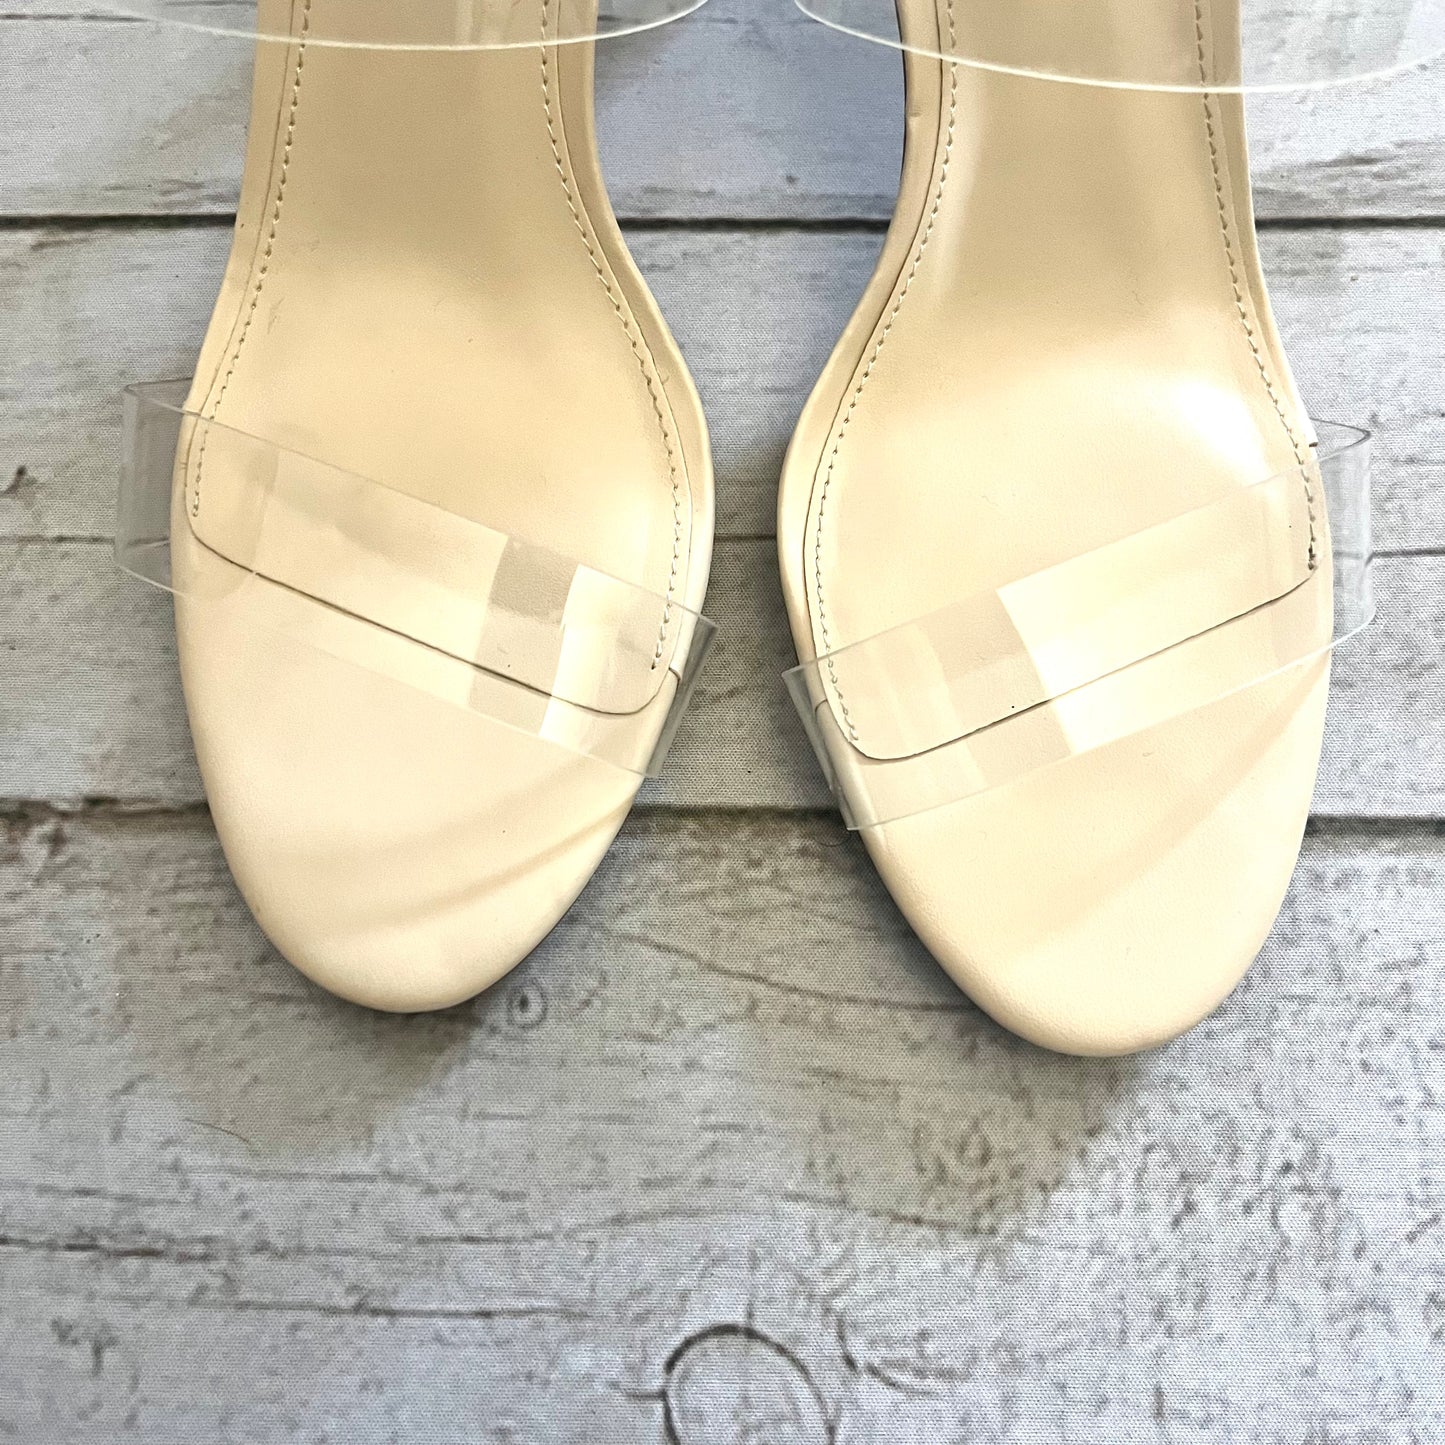 Sandals Heels Stiletto By Steve Madden  Size: 11